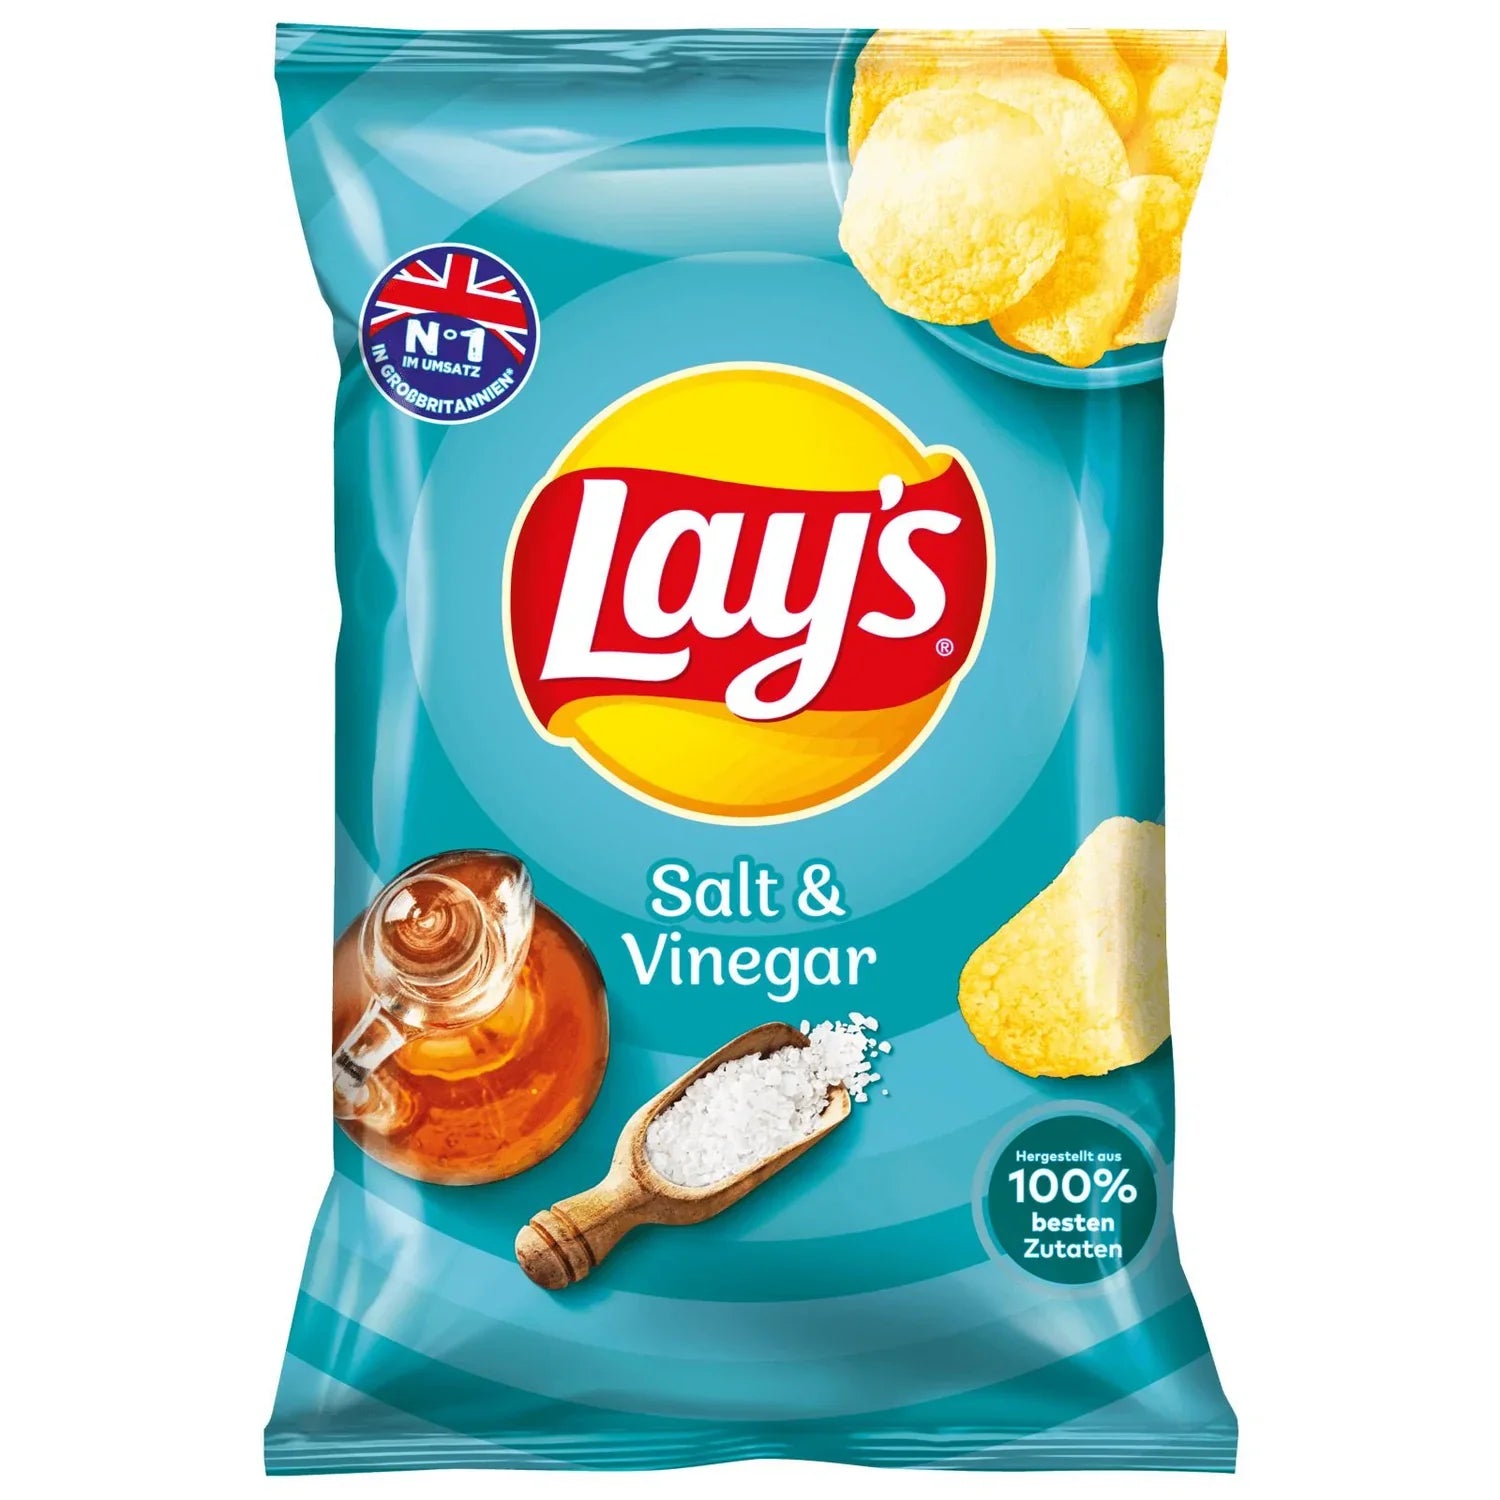 Lay's Salt & Vinegar (150g)